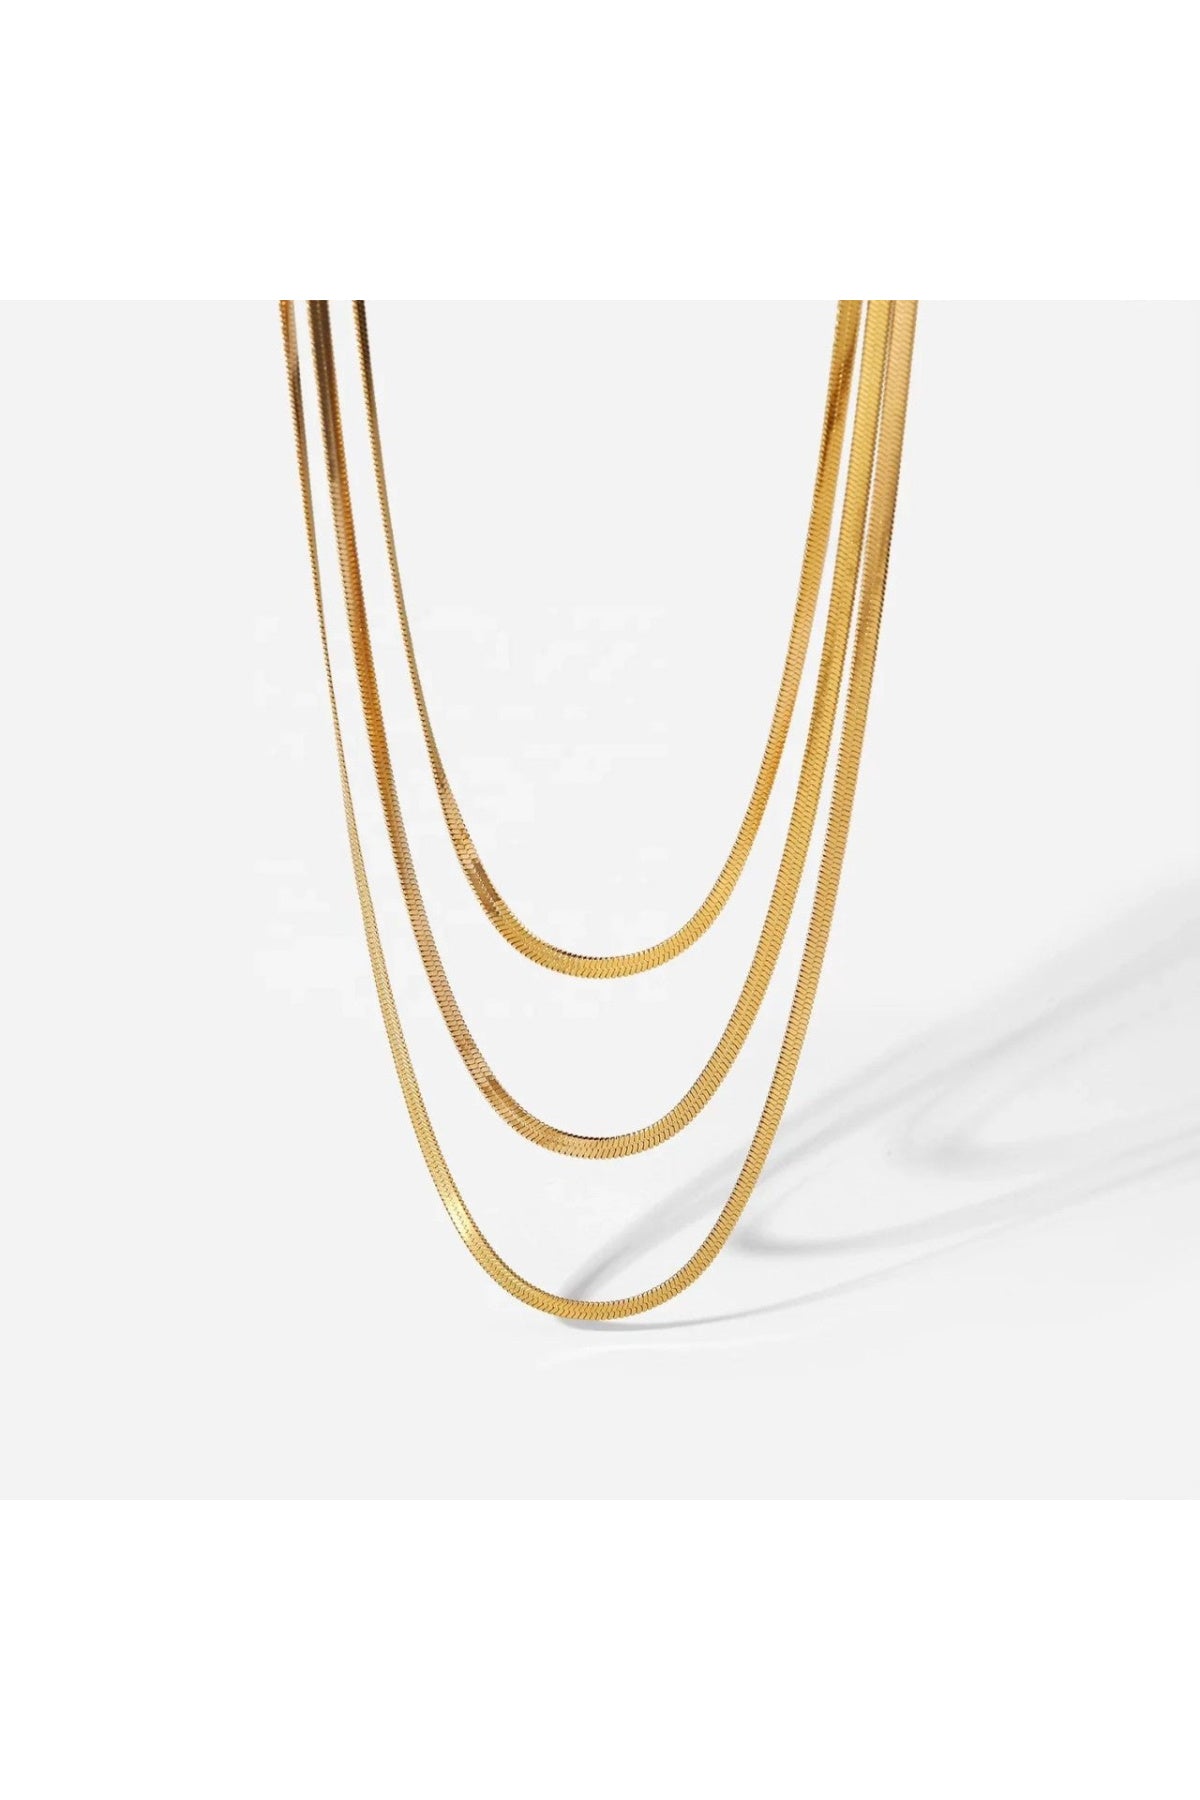 Sahira Penelope 18k Gold Plated Multi Layered Necklace - Magnolia Boutique